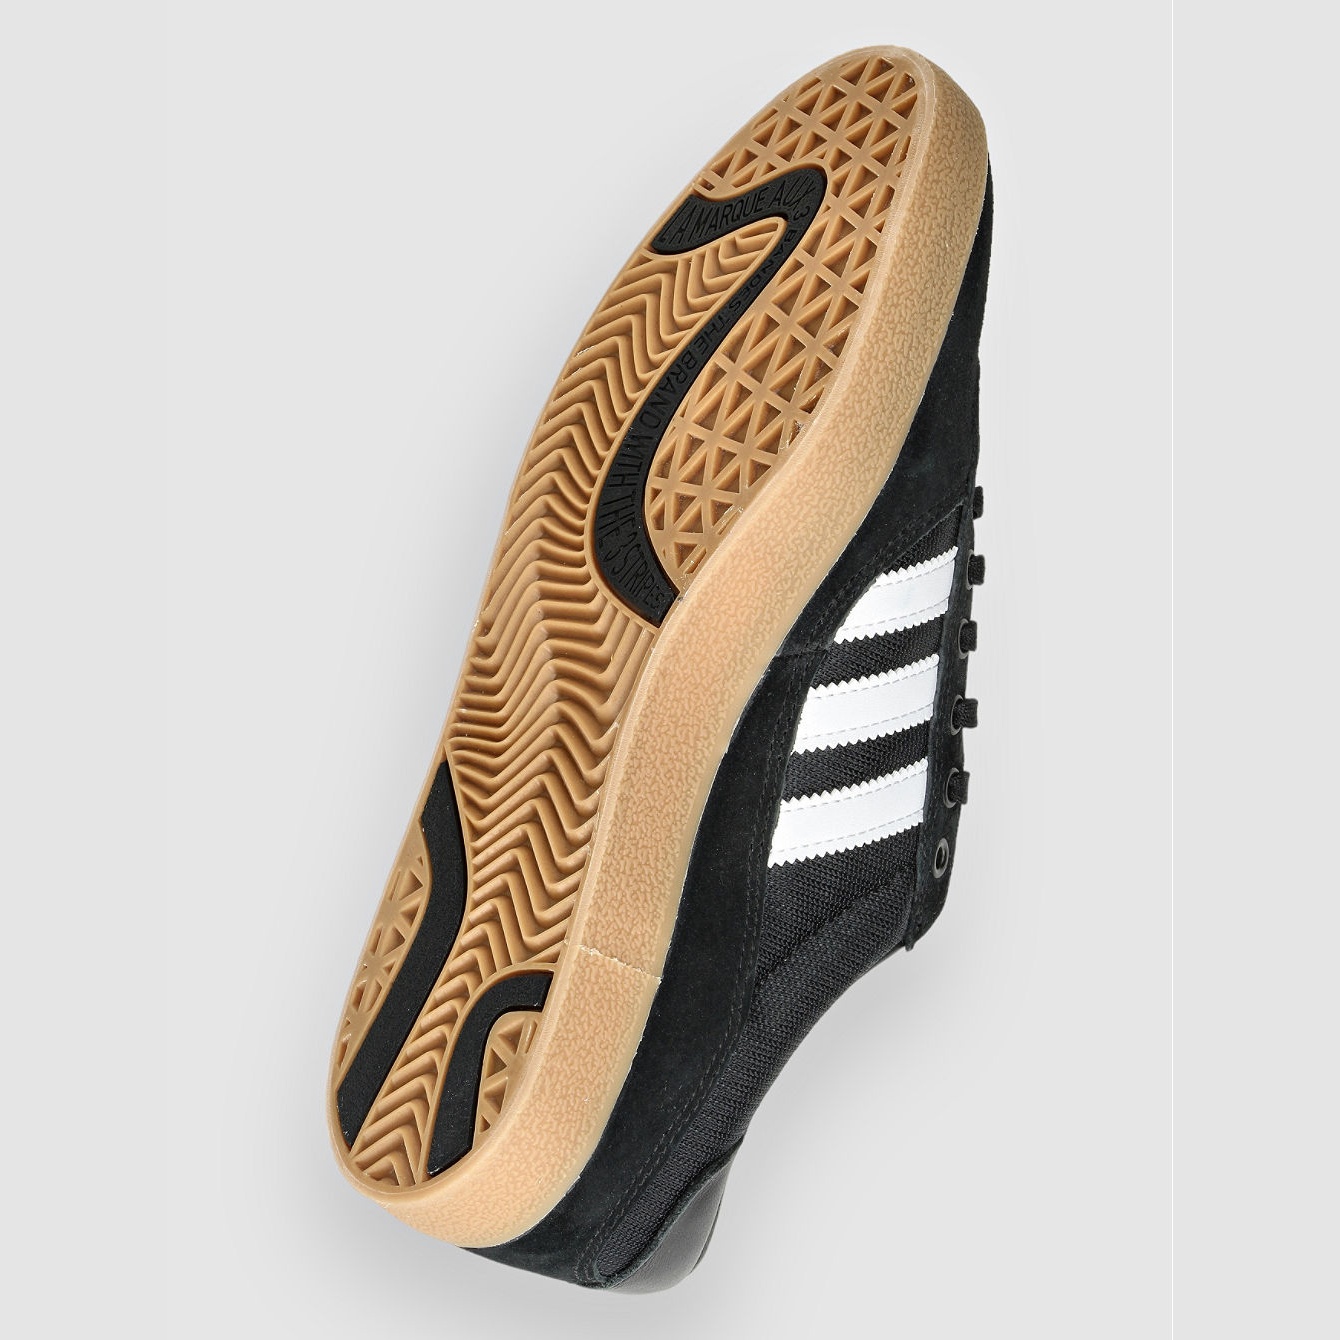 Adidas Puig Indoor Cblack Ftwwht Gum4 Chaussures de skate Homme vue2